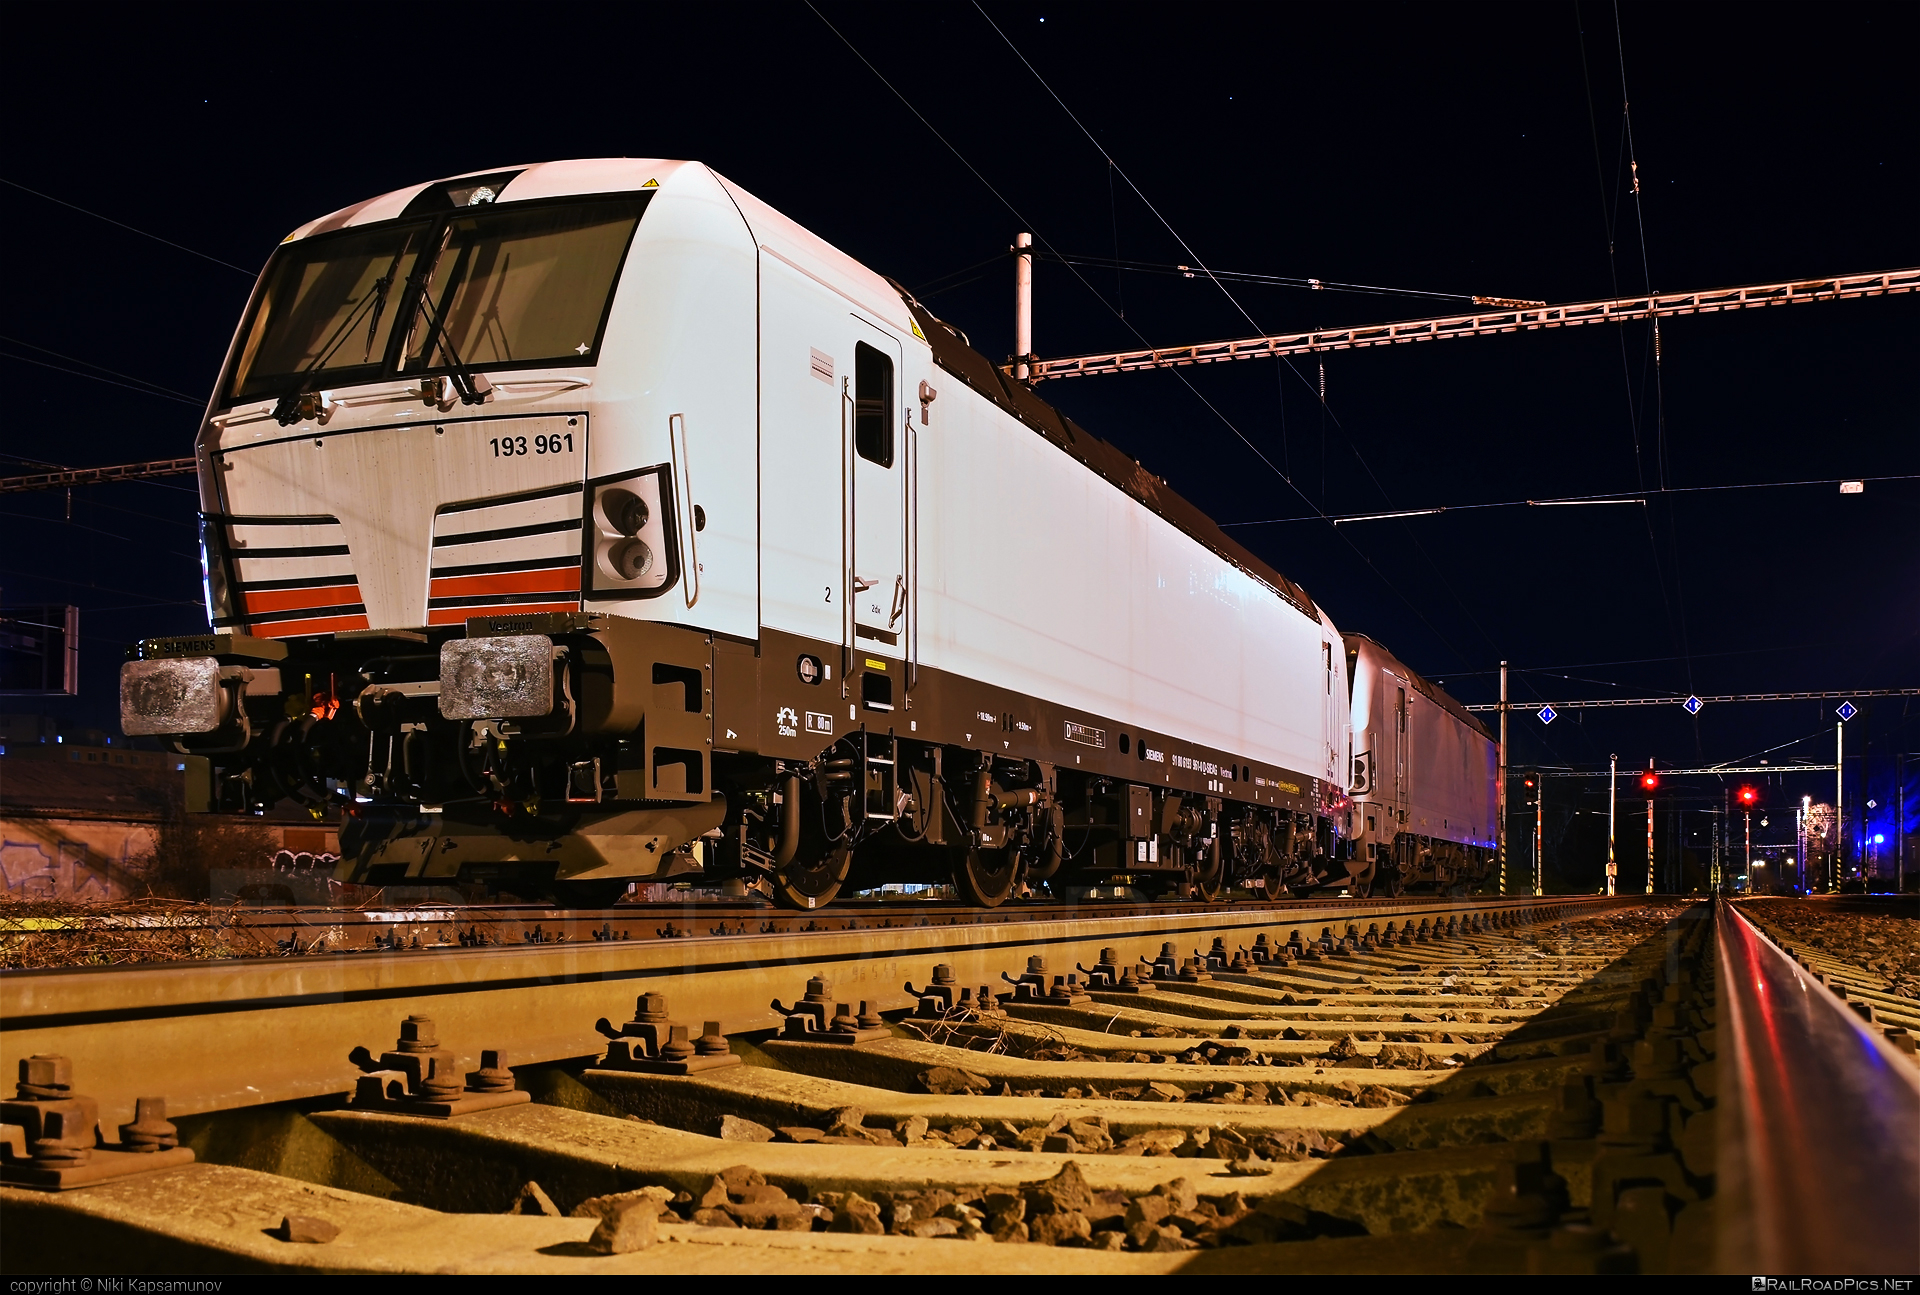 Siemens Vectron MS - 193 961 operated by Salzburger Eisenbahn Transportlogistik GmbH #SalzburgerEisenbahnTransportlogistik #SalzburgerEisenbahnTransportlogistikGmbH #SiemensMobility #SiemensMobilityGmbH #setg #siemens #siemensVectron #siemensVectronMS #vectron #vectronMS